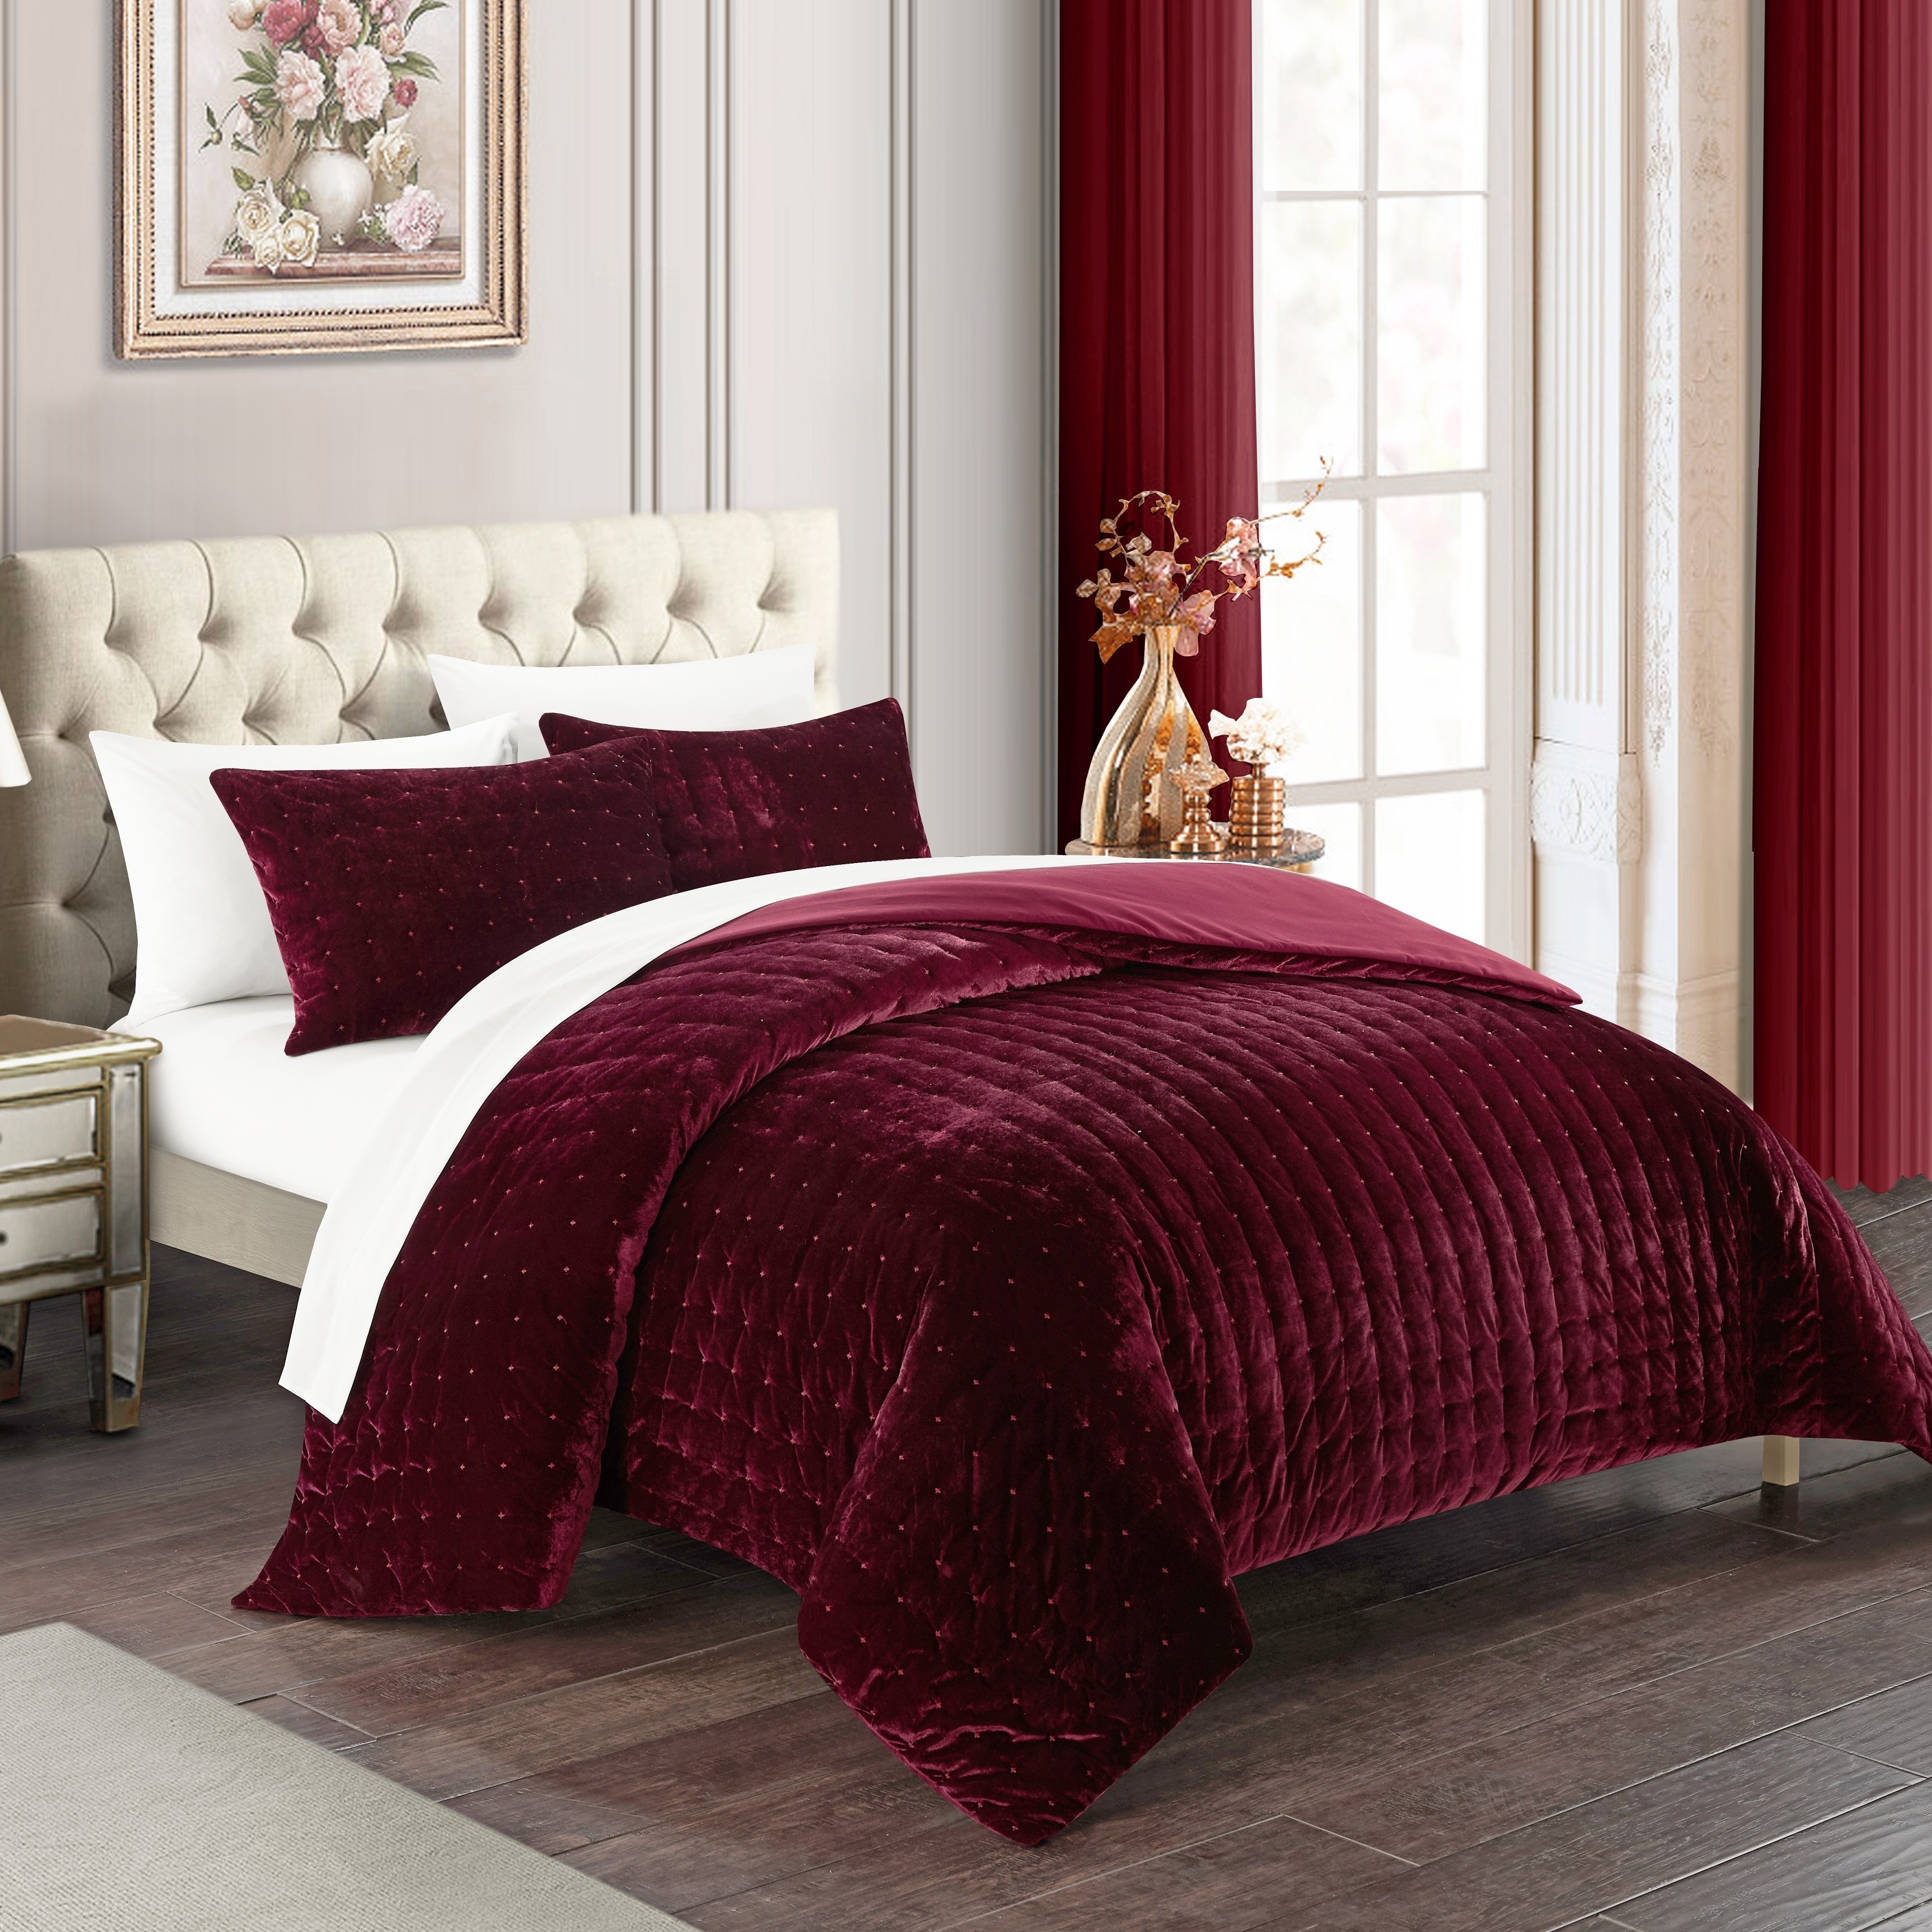 Chyna 3 Piece Comforter Set Luxurious Velvet Bedding - Burgundy, Queen